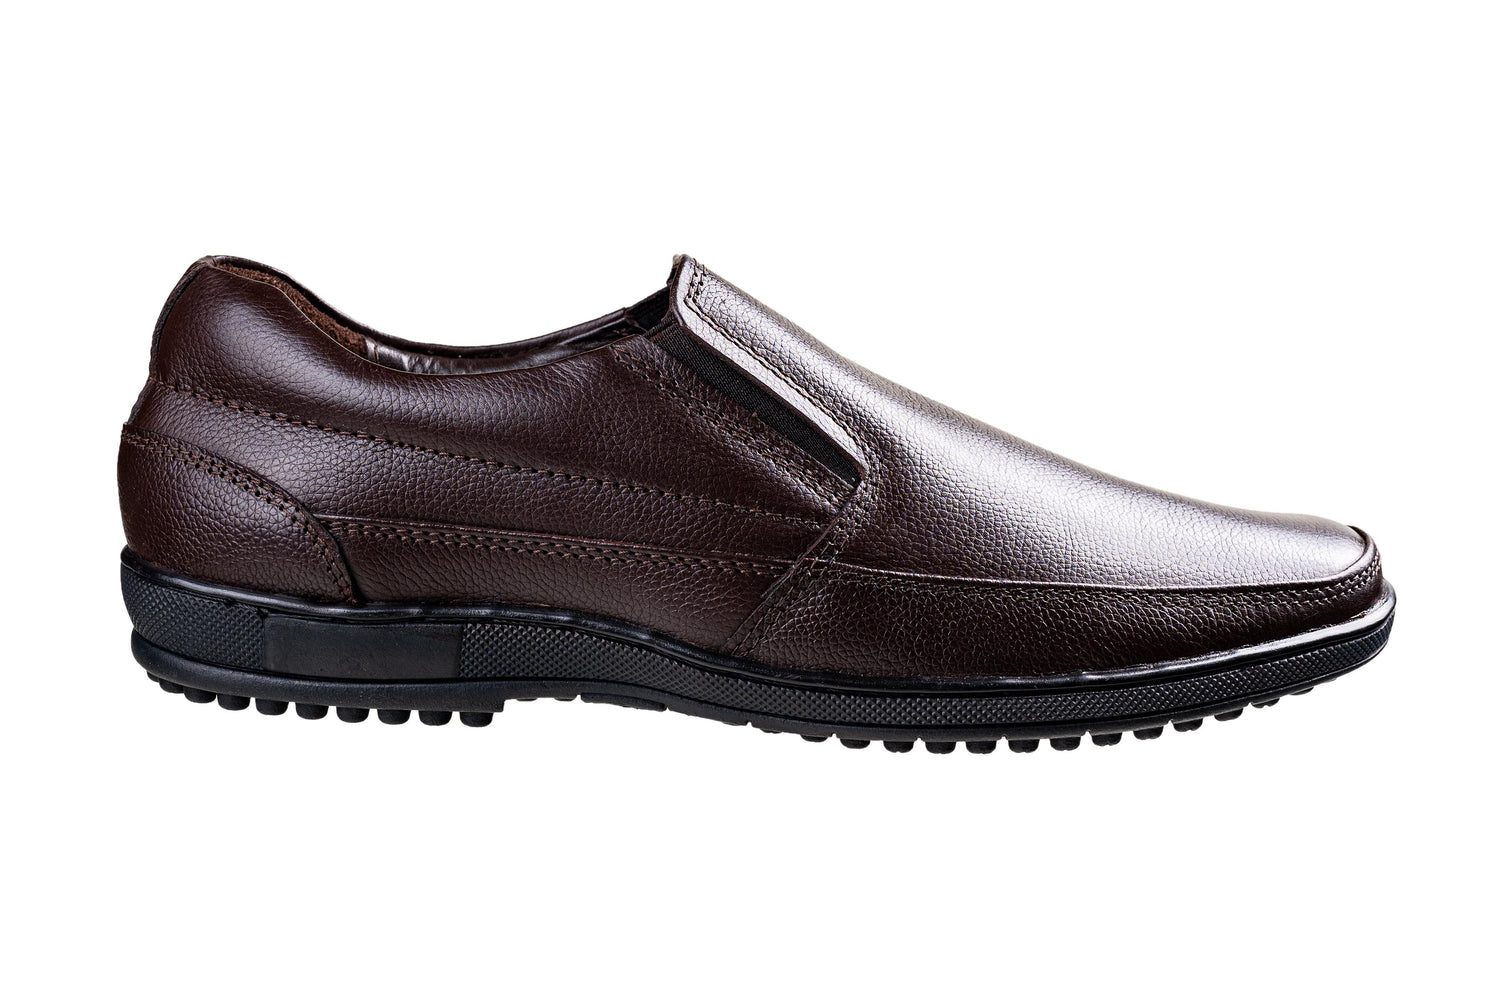 Beresford Gents Brown Shoe